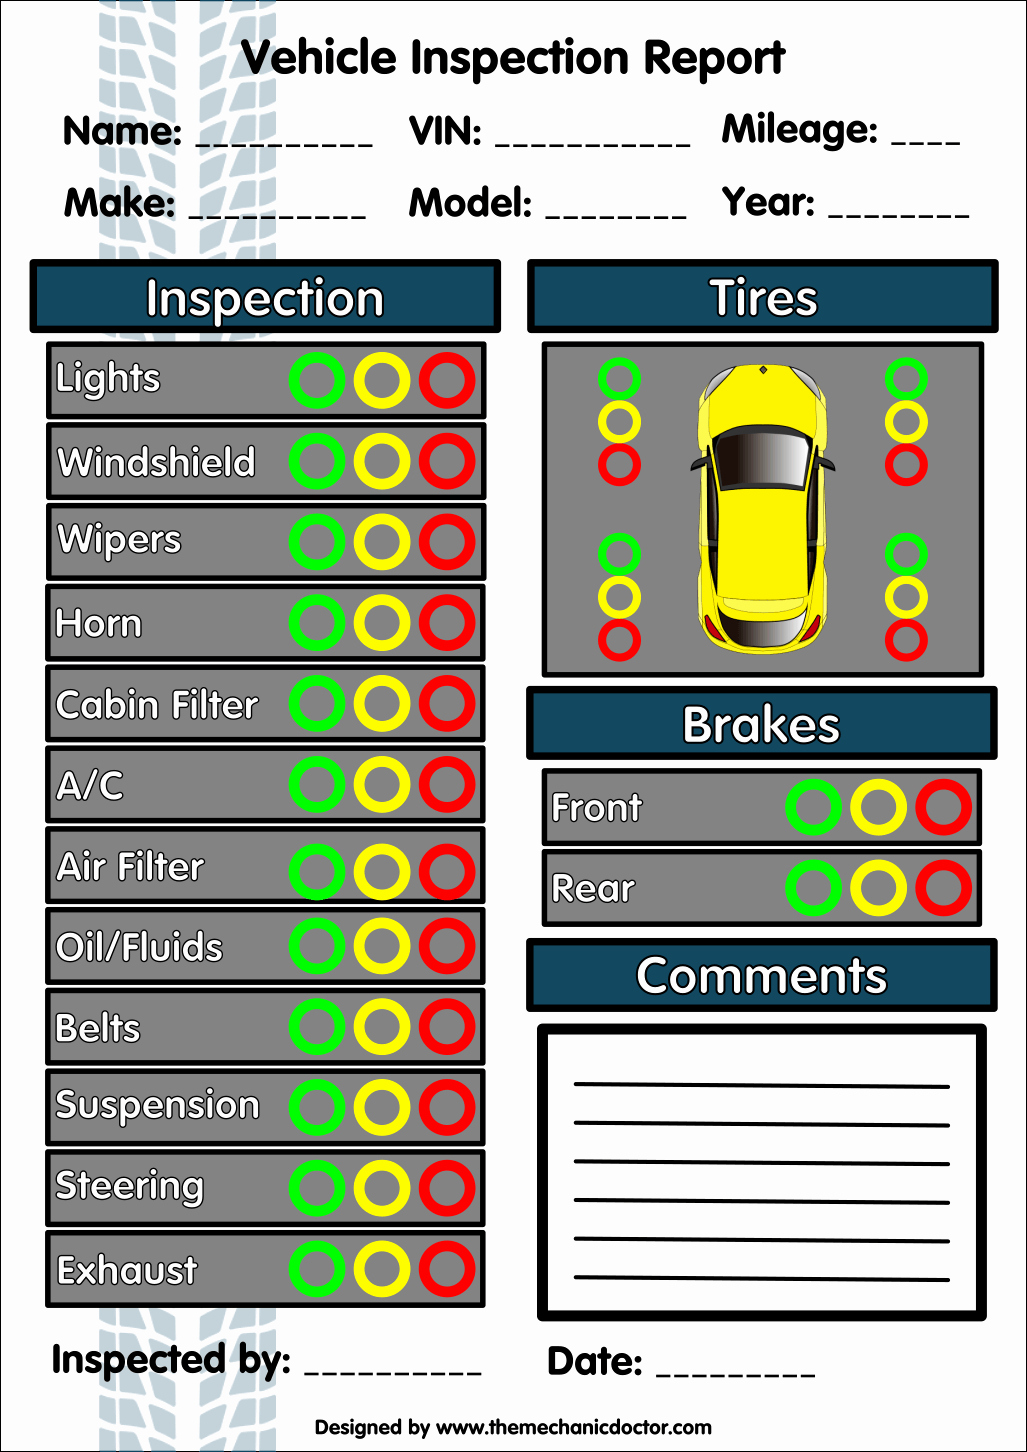 Vehicle Inspection Checklist Template Fresh Checklist Download Vehicle Inspection Checklist Template